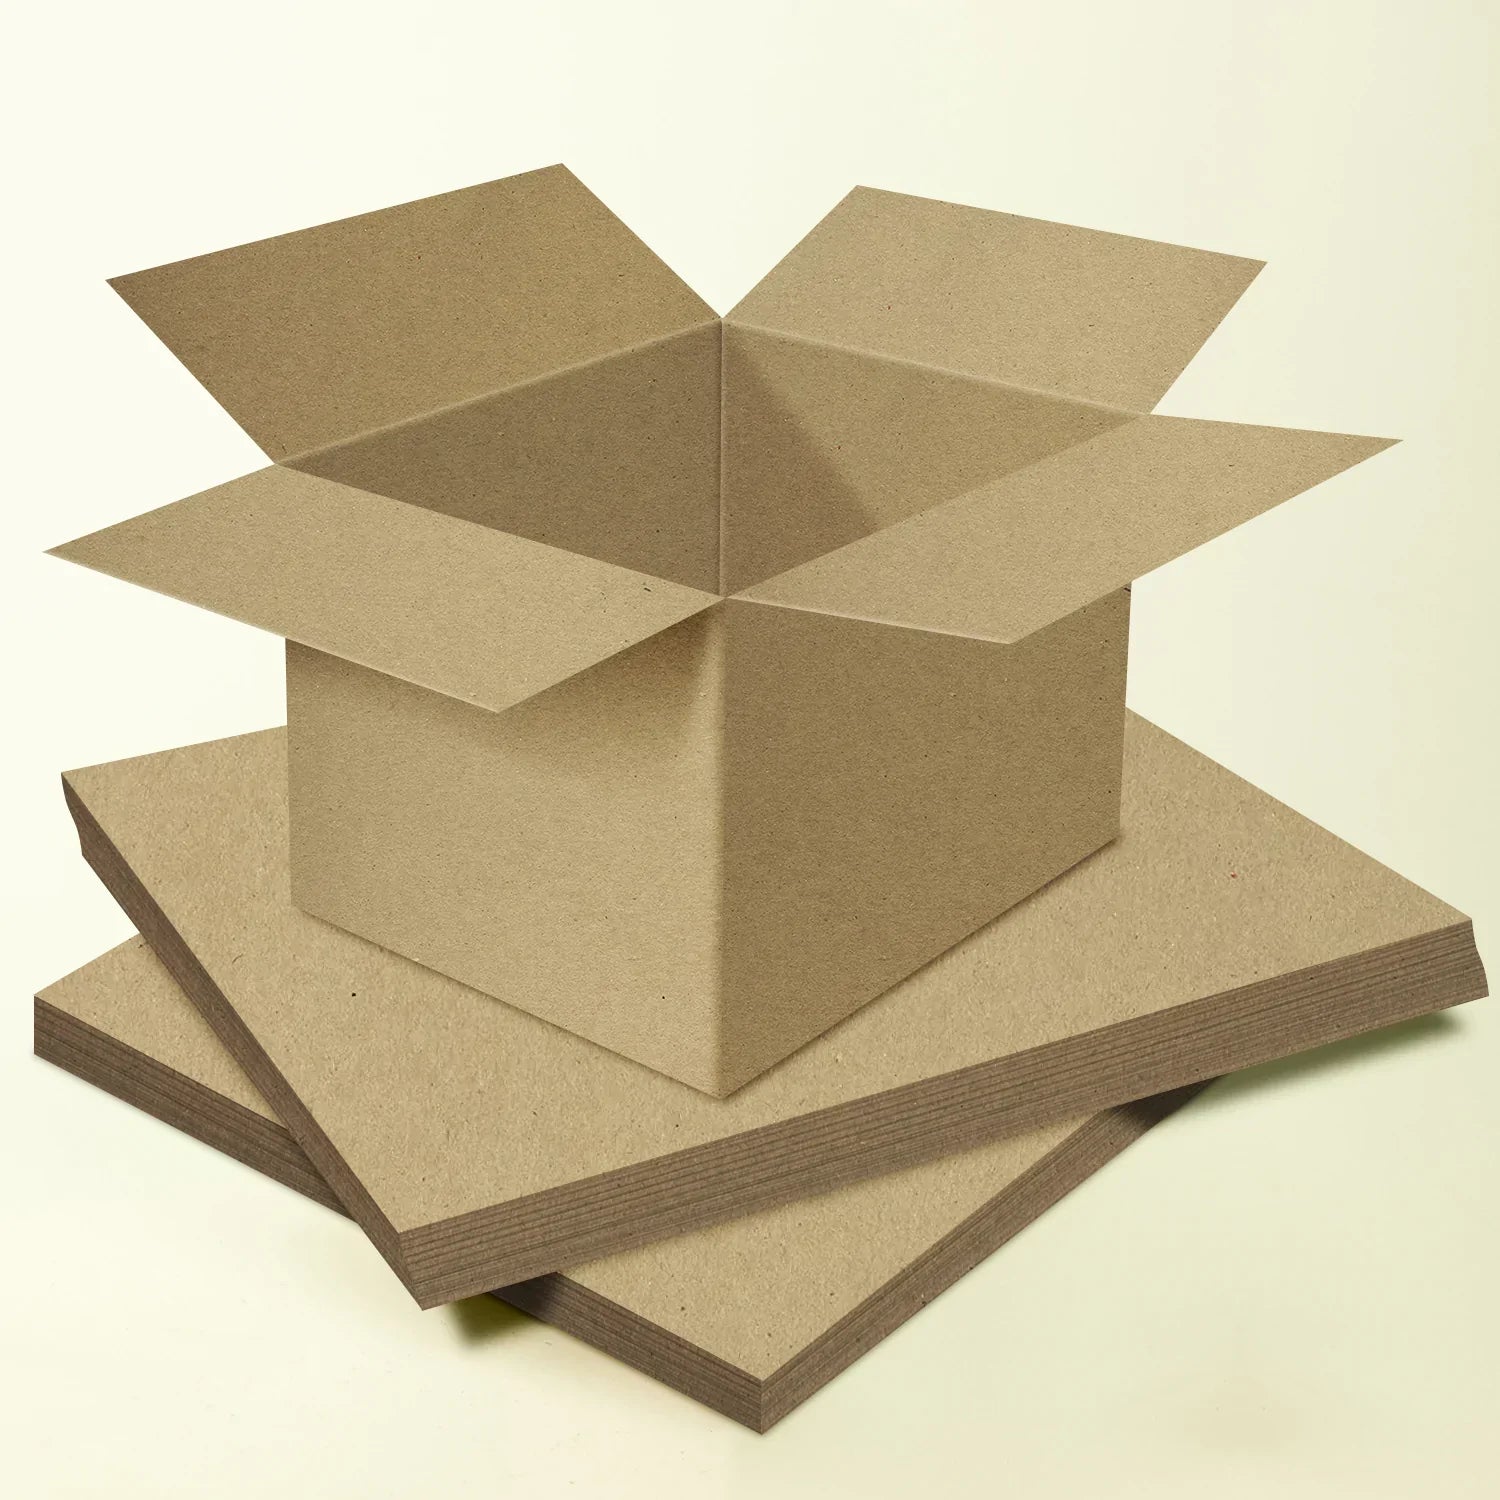 8.5 x 11 Chipboard Medium Weight 30Pt (Point) Cardboard Scrapbook Sheets | Brown Kraft Boards | 50 Sheets per Pack FoldCard